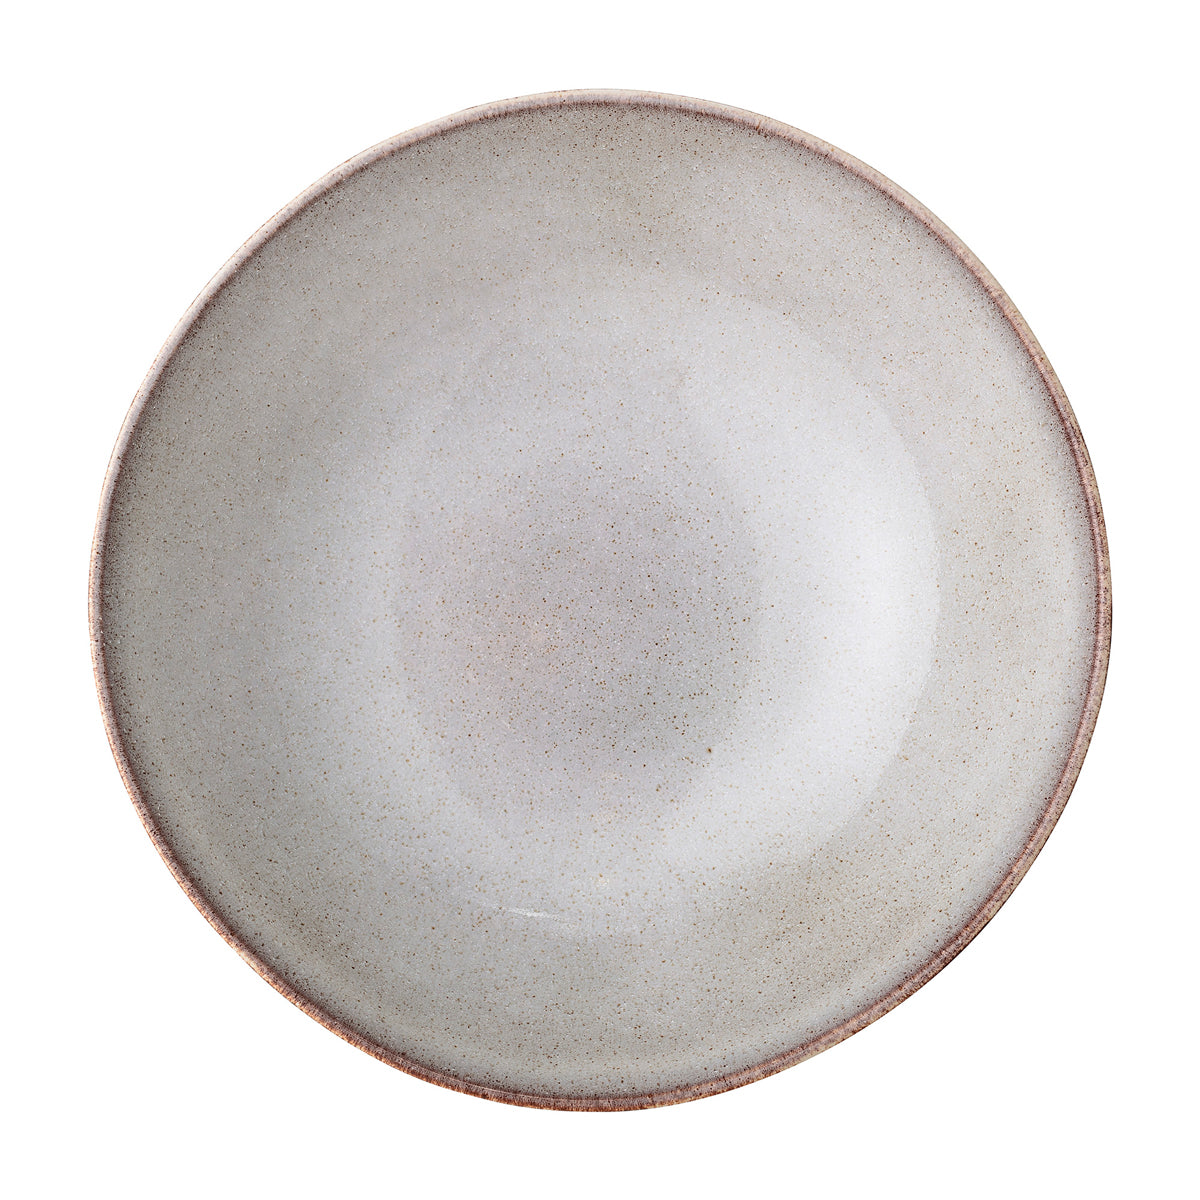 Bloomingville Sandrine Serving Bowl, Grey, Stoneware